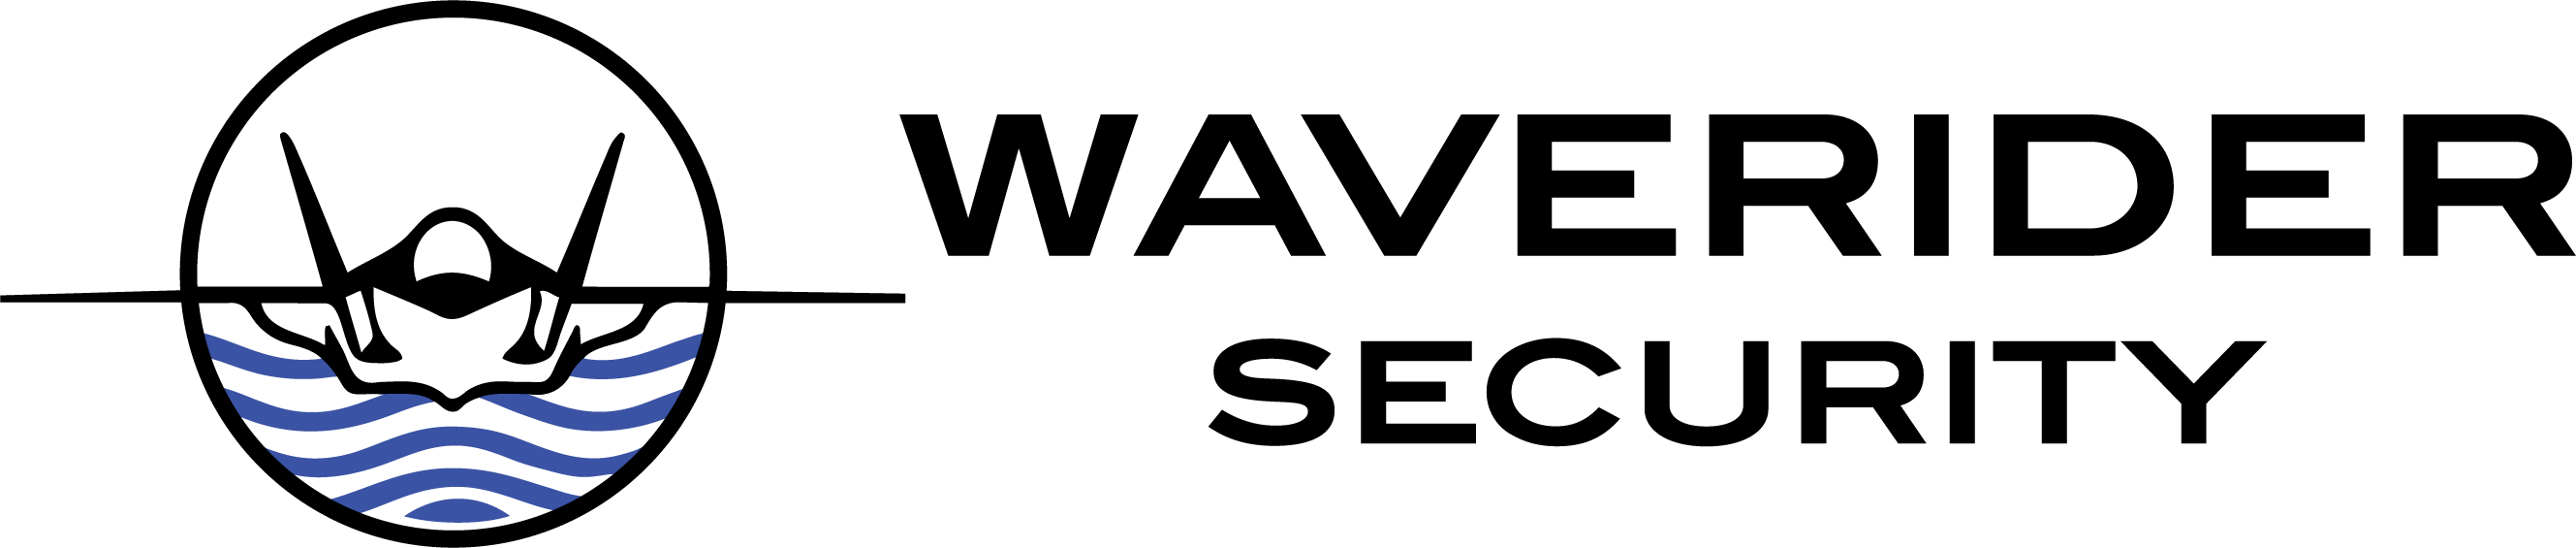 waverider-logo